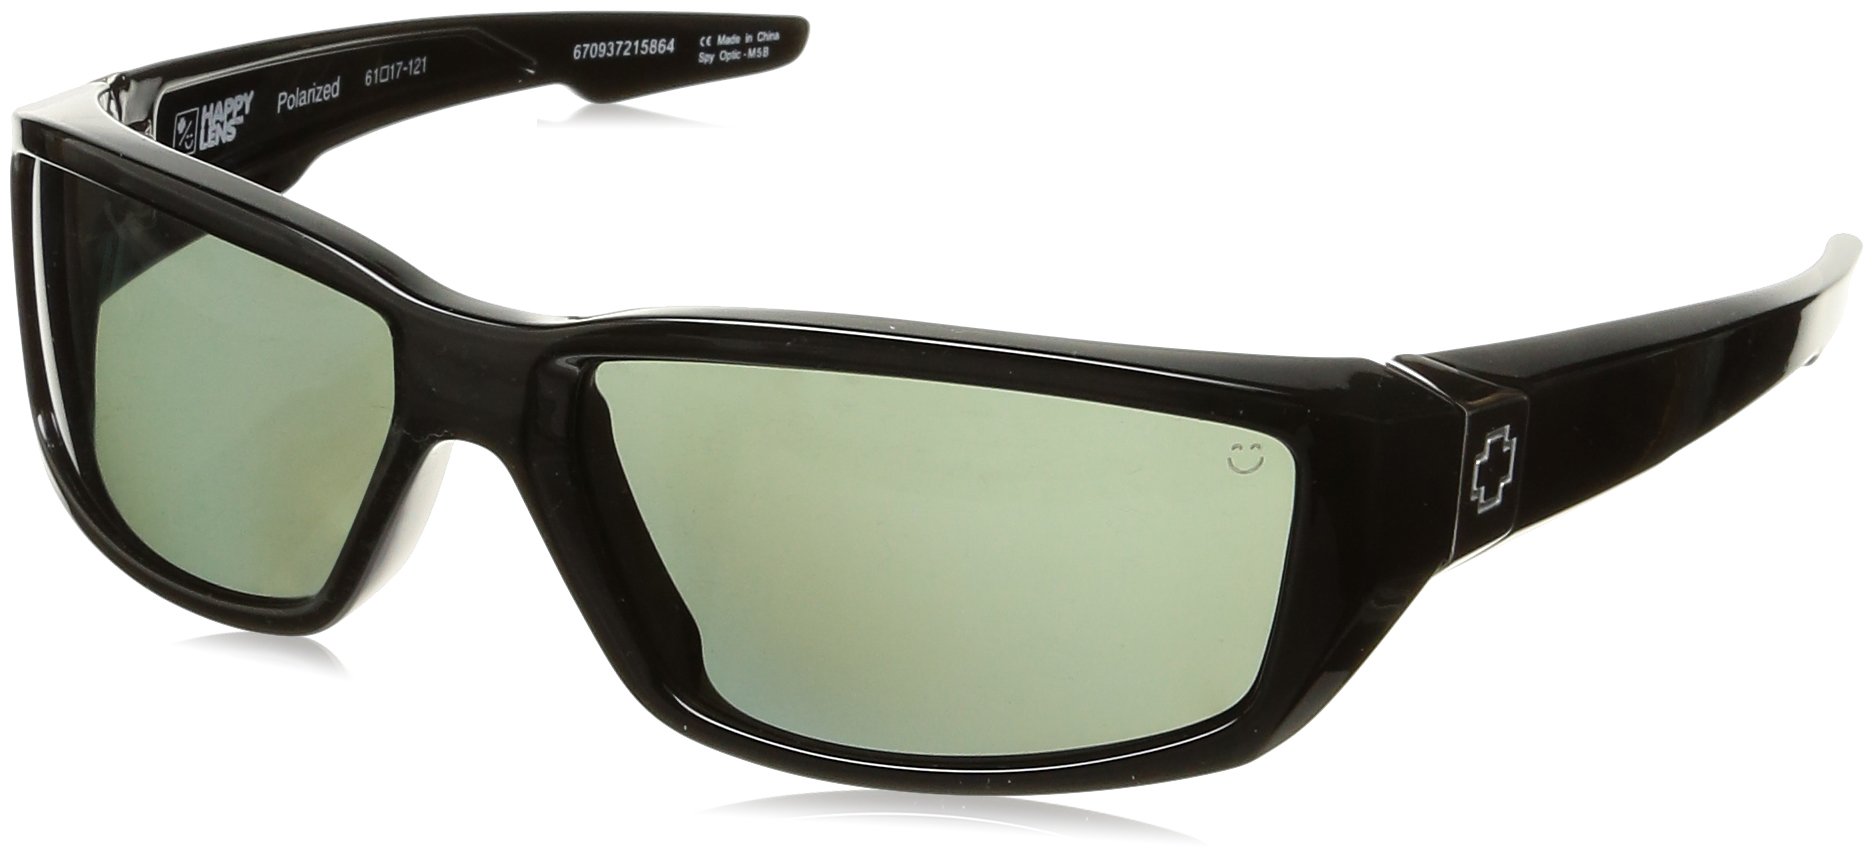 Spy Optic Dirty Mo Sunglasses - Black/Happy Gray/Green Polar